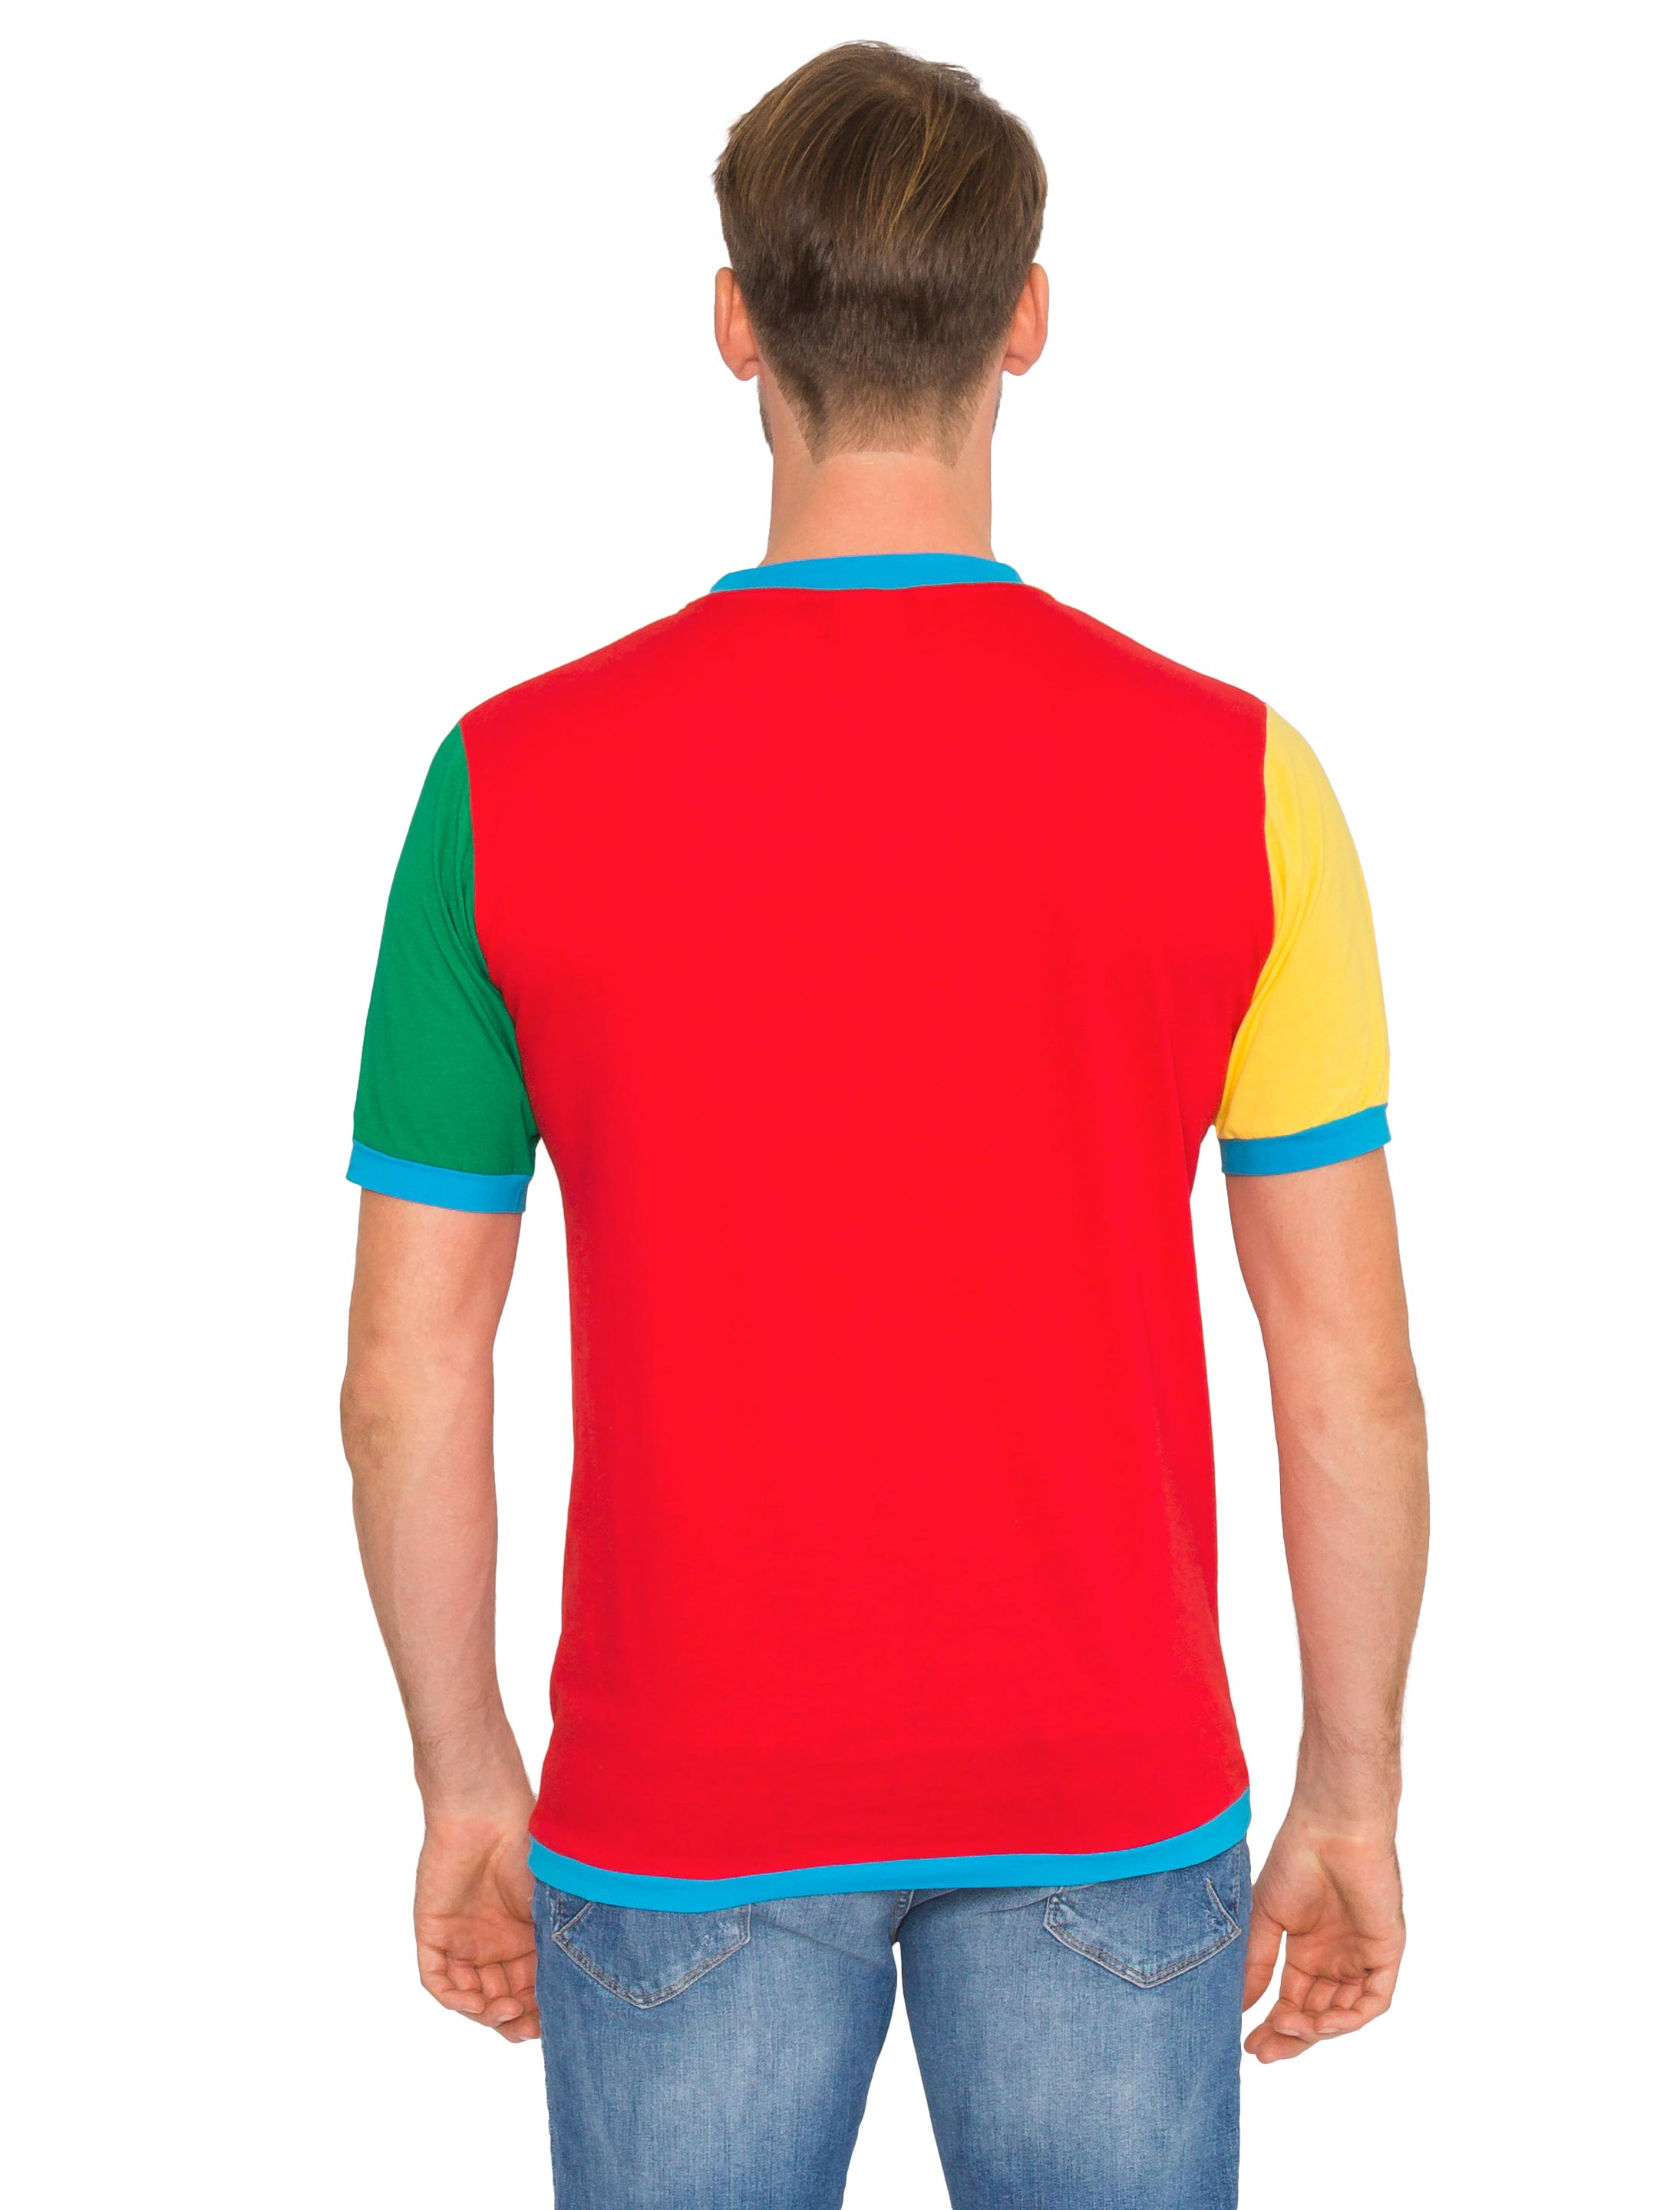 Motto Shirt 2018/2019 mehrfarbig S